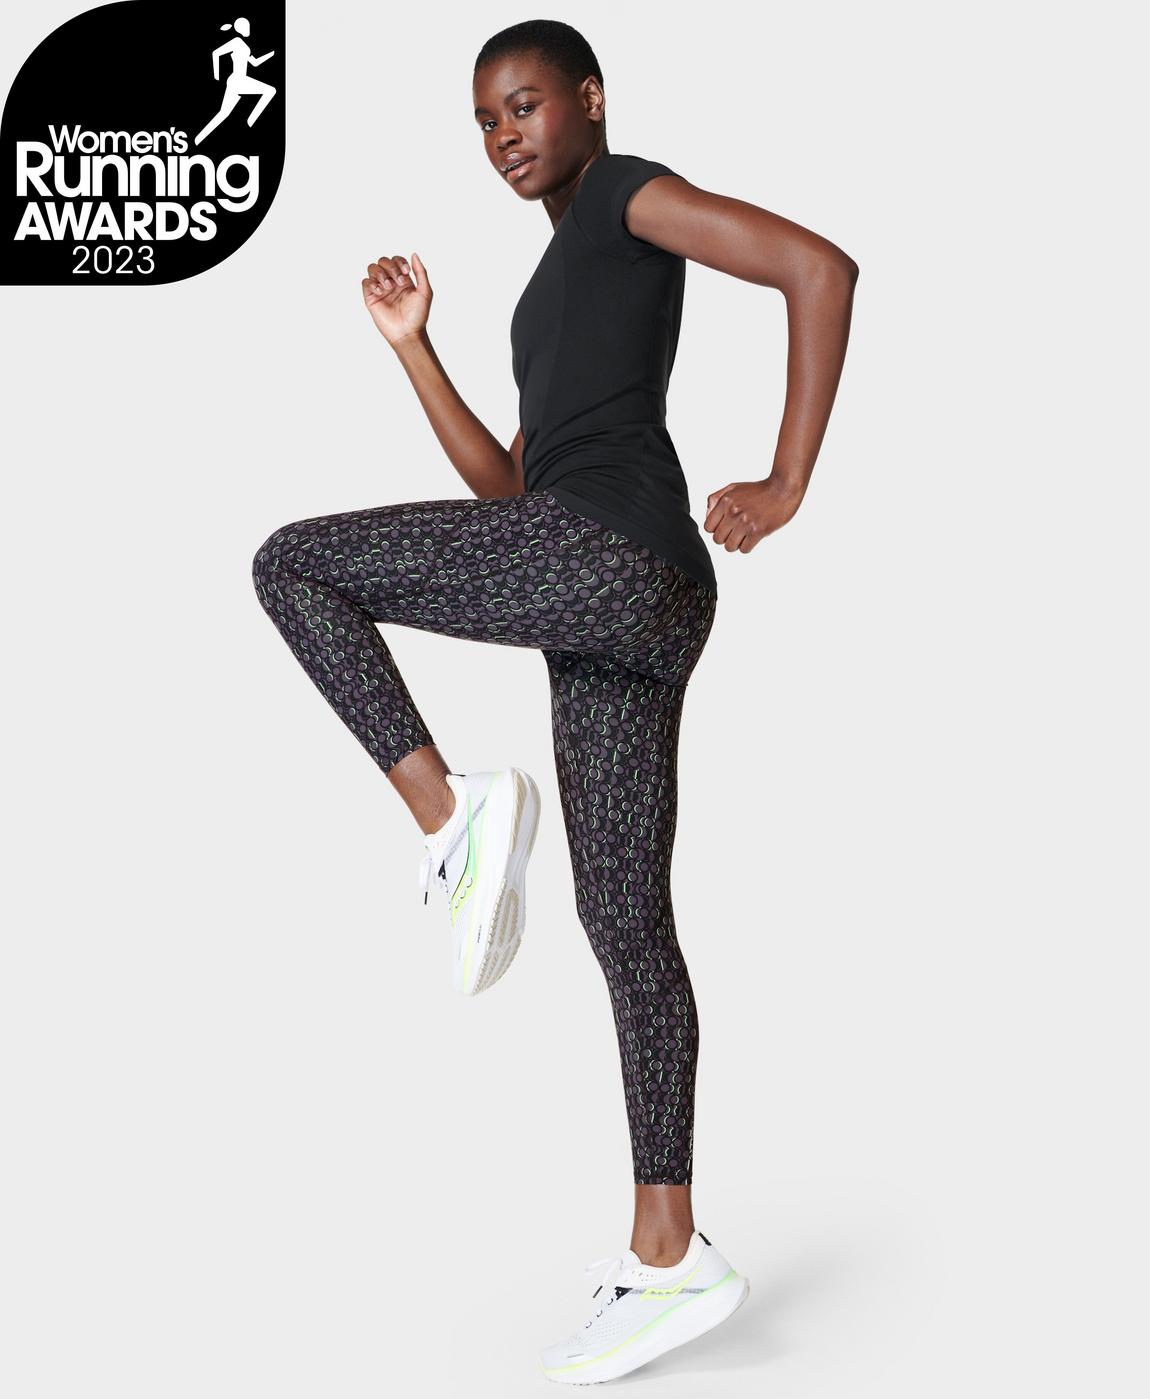 Nike Women's Tech Tight Fit Running Capri 